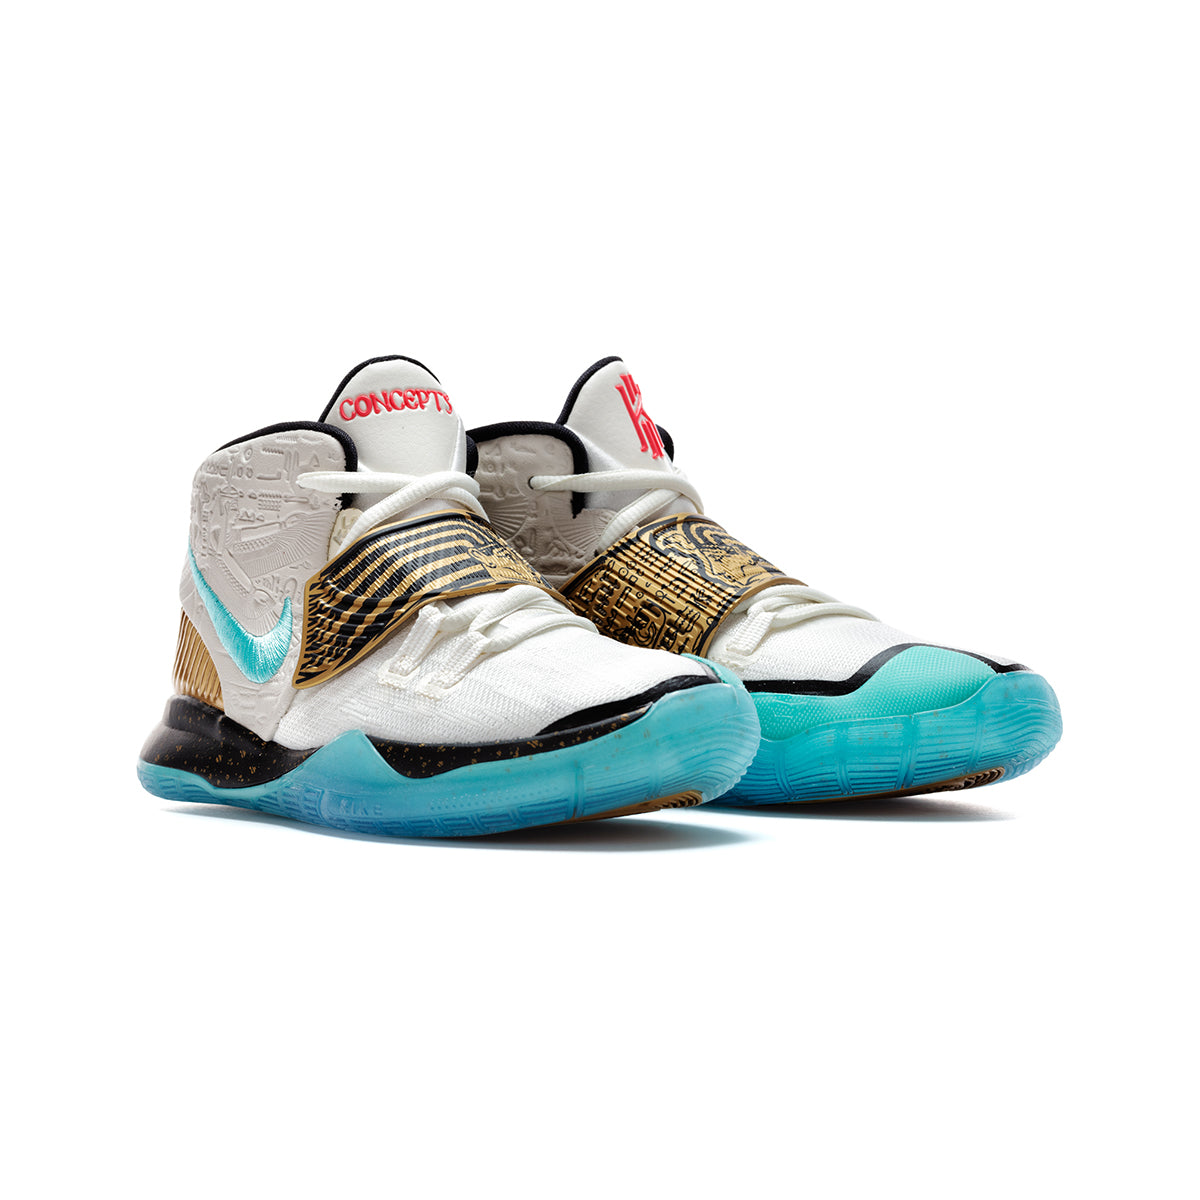 Nike Kyrie 5 Basketball Shoe Size 15 White Basketball